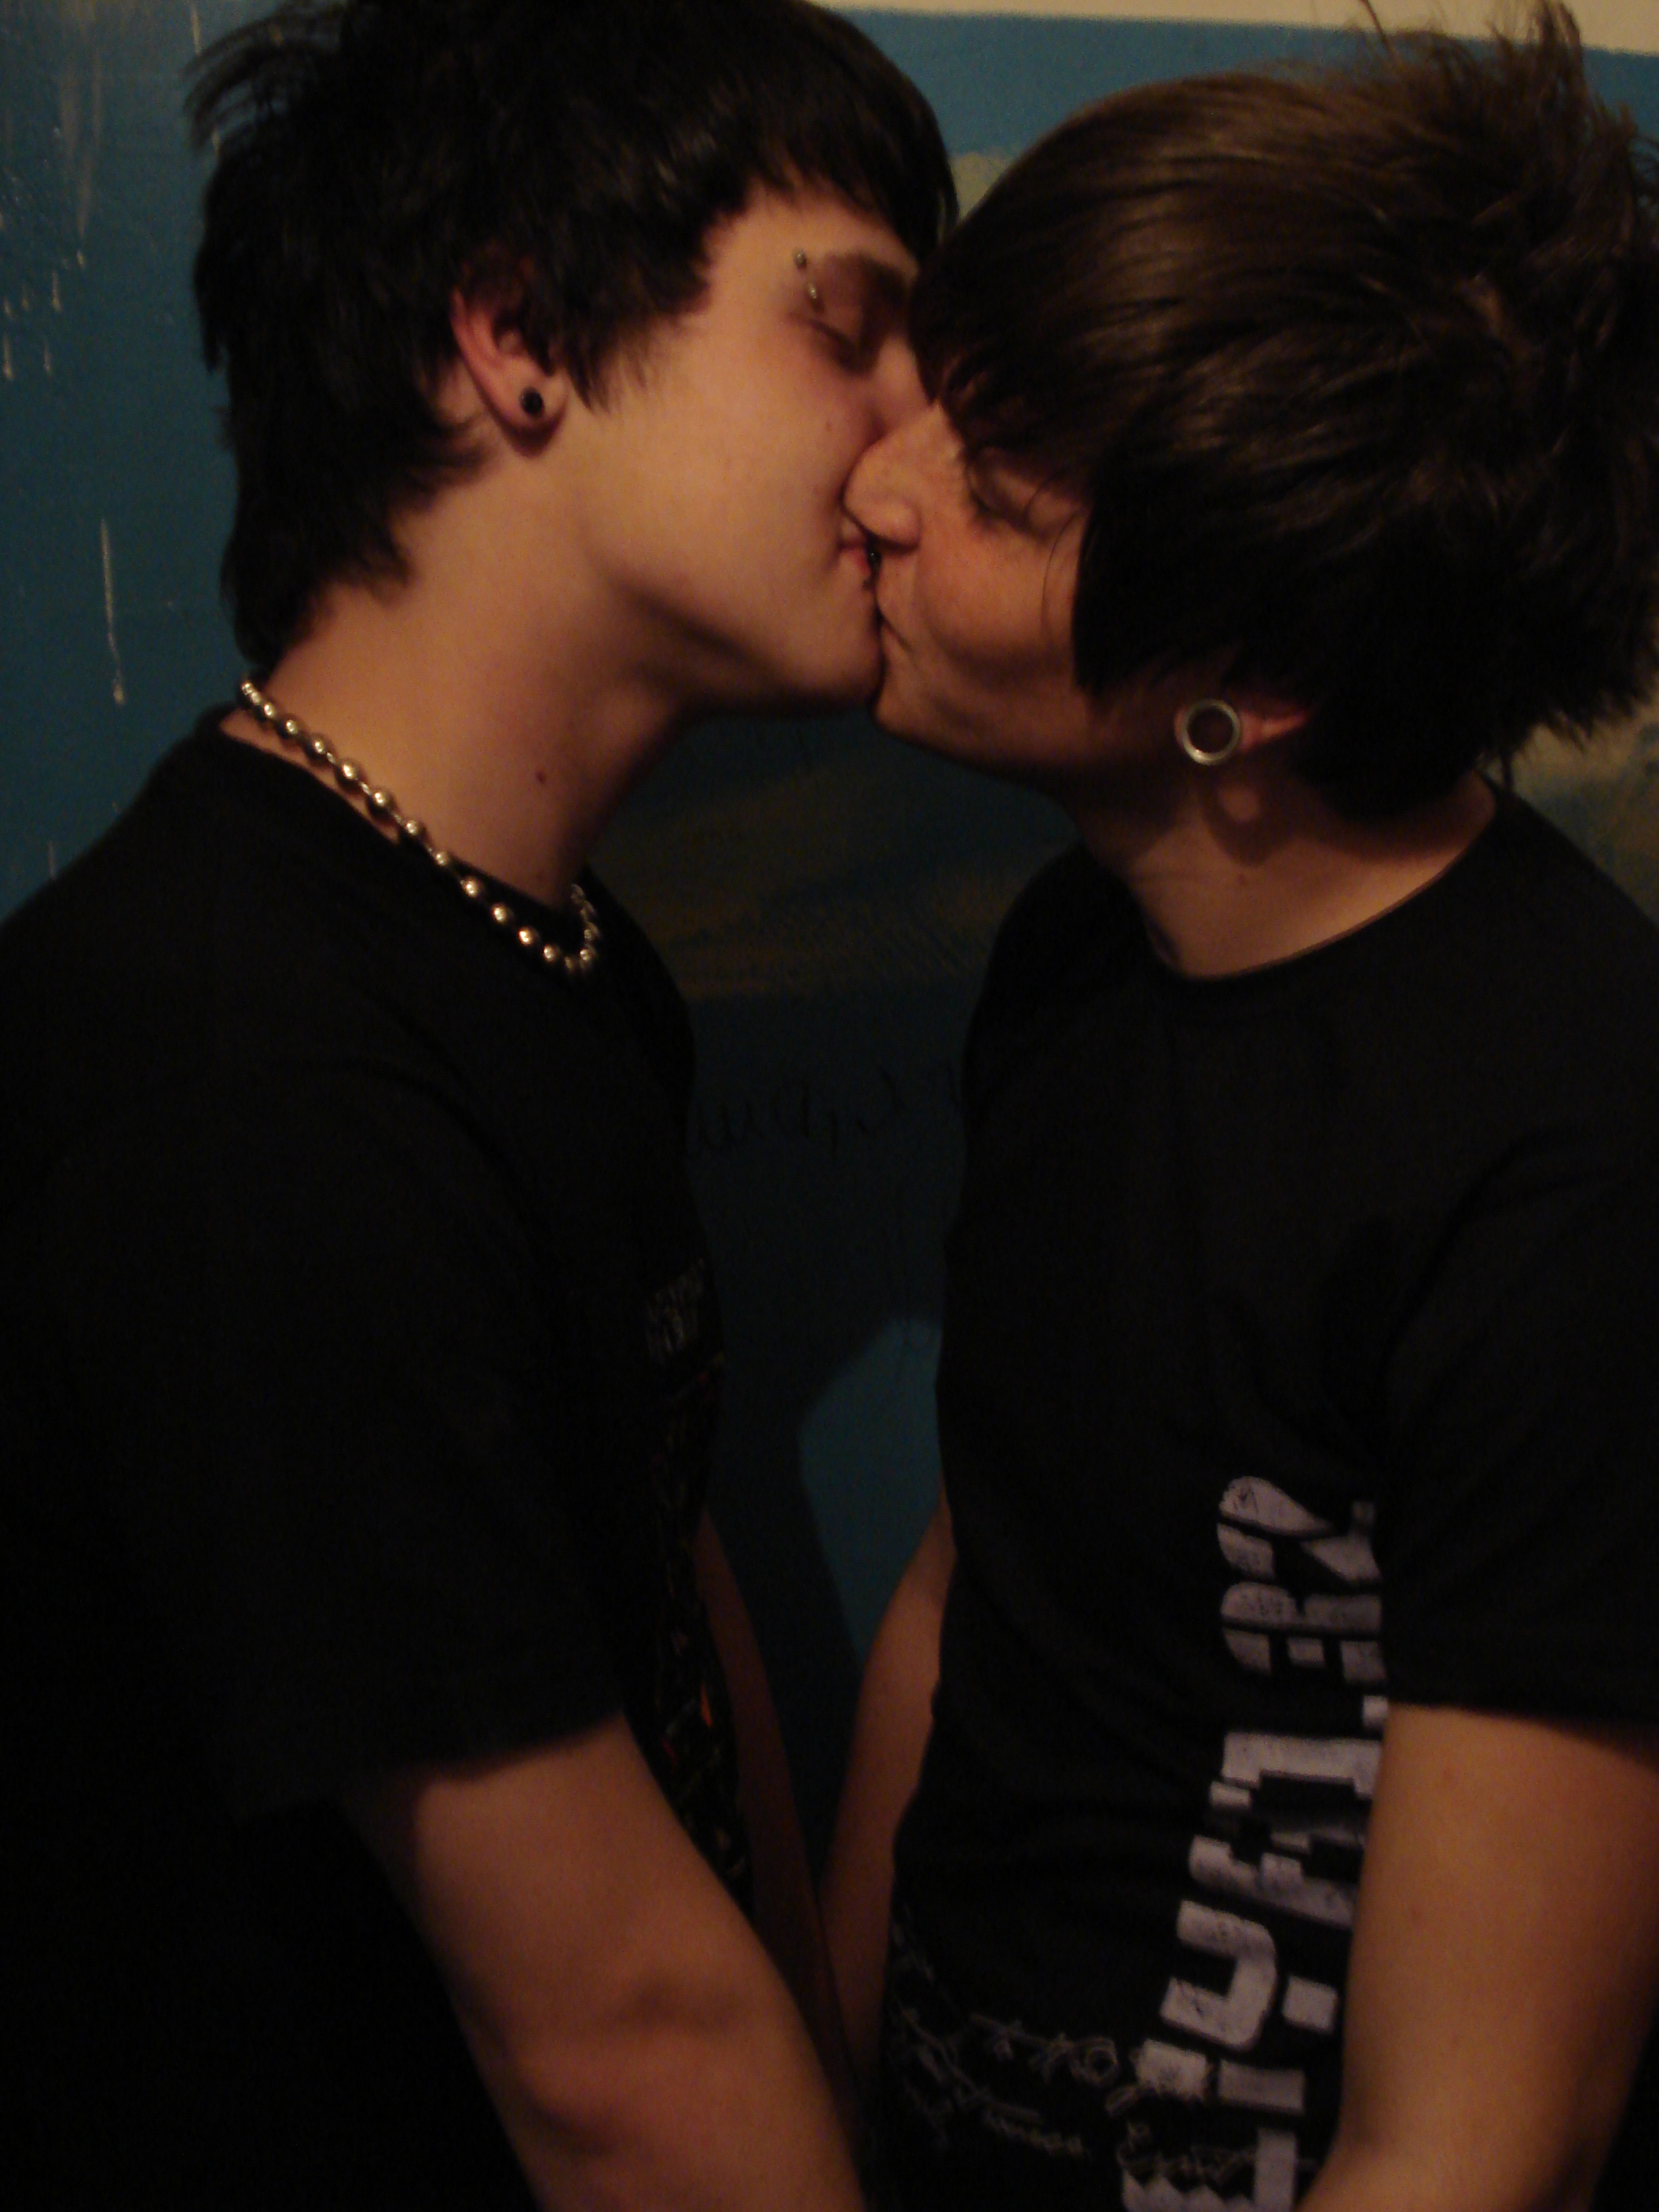 геи мальчики целуются фото фото 62